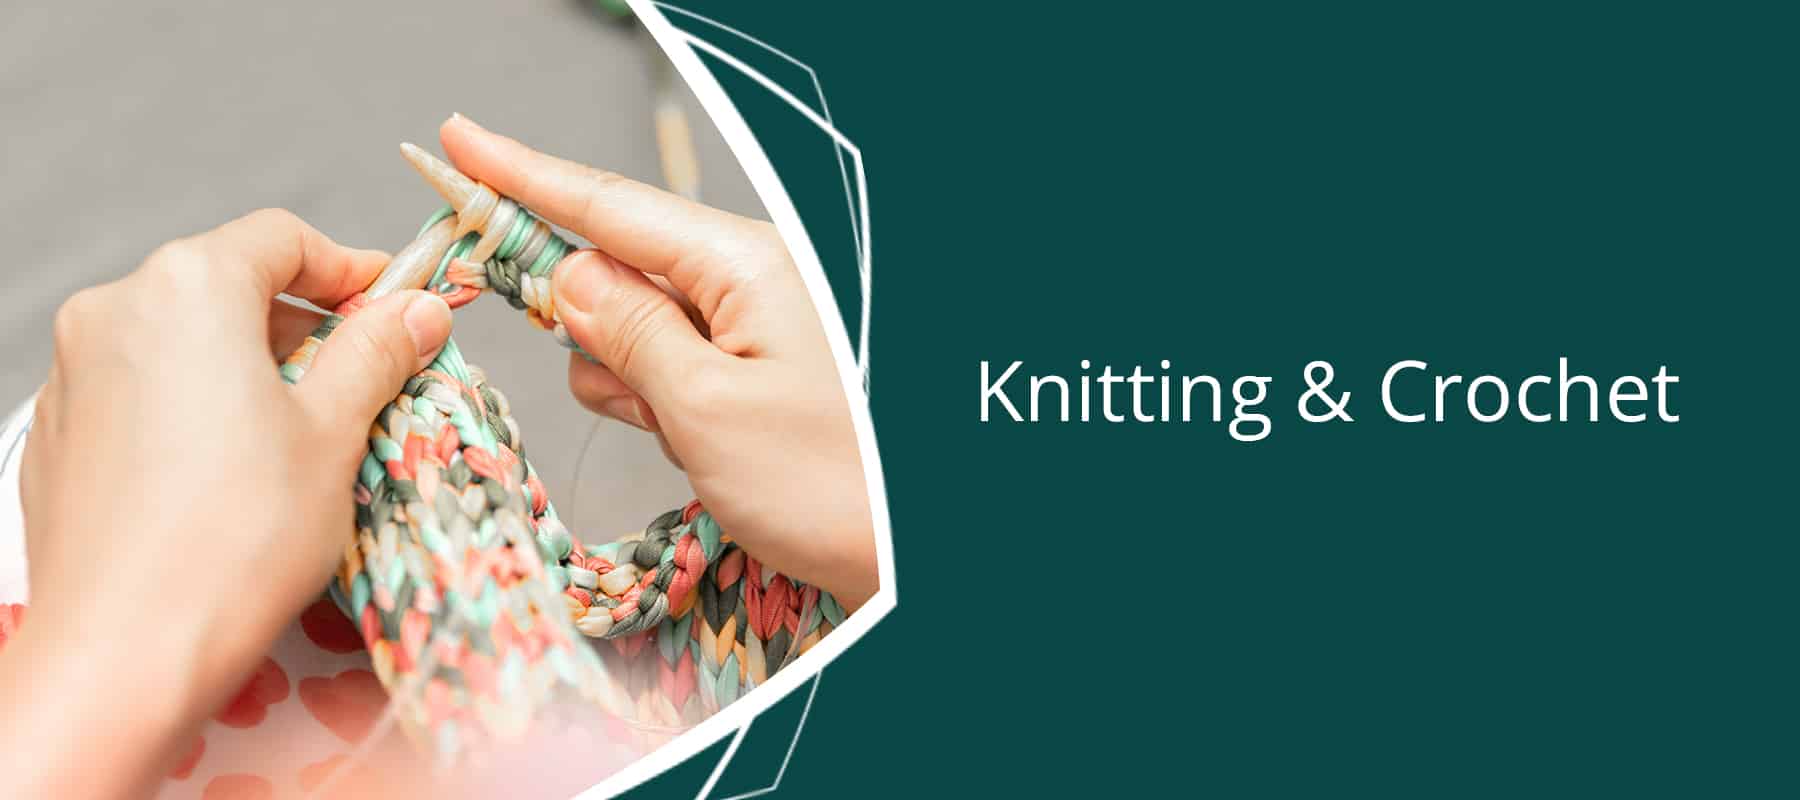 Knitting & Crochet Tools